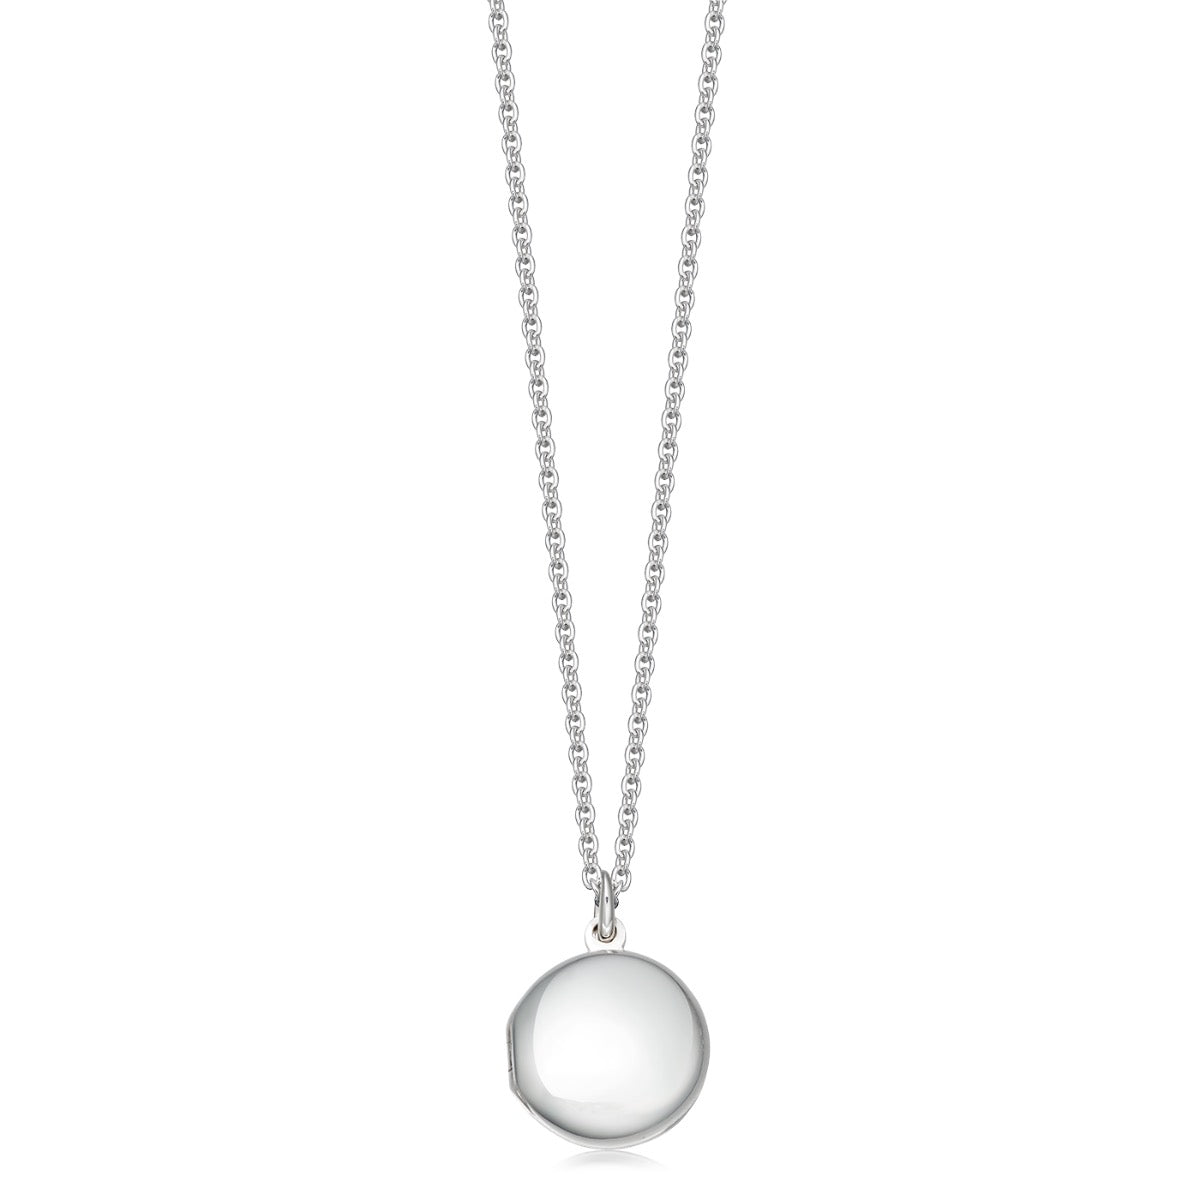 Childs Small Silver Round Locket Necklace| Hersey & Son Silversmiths